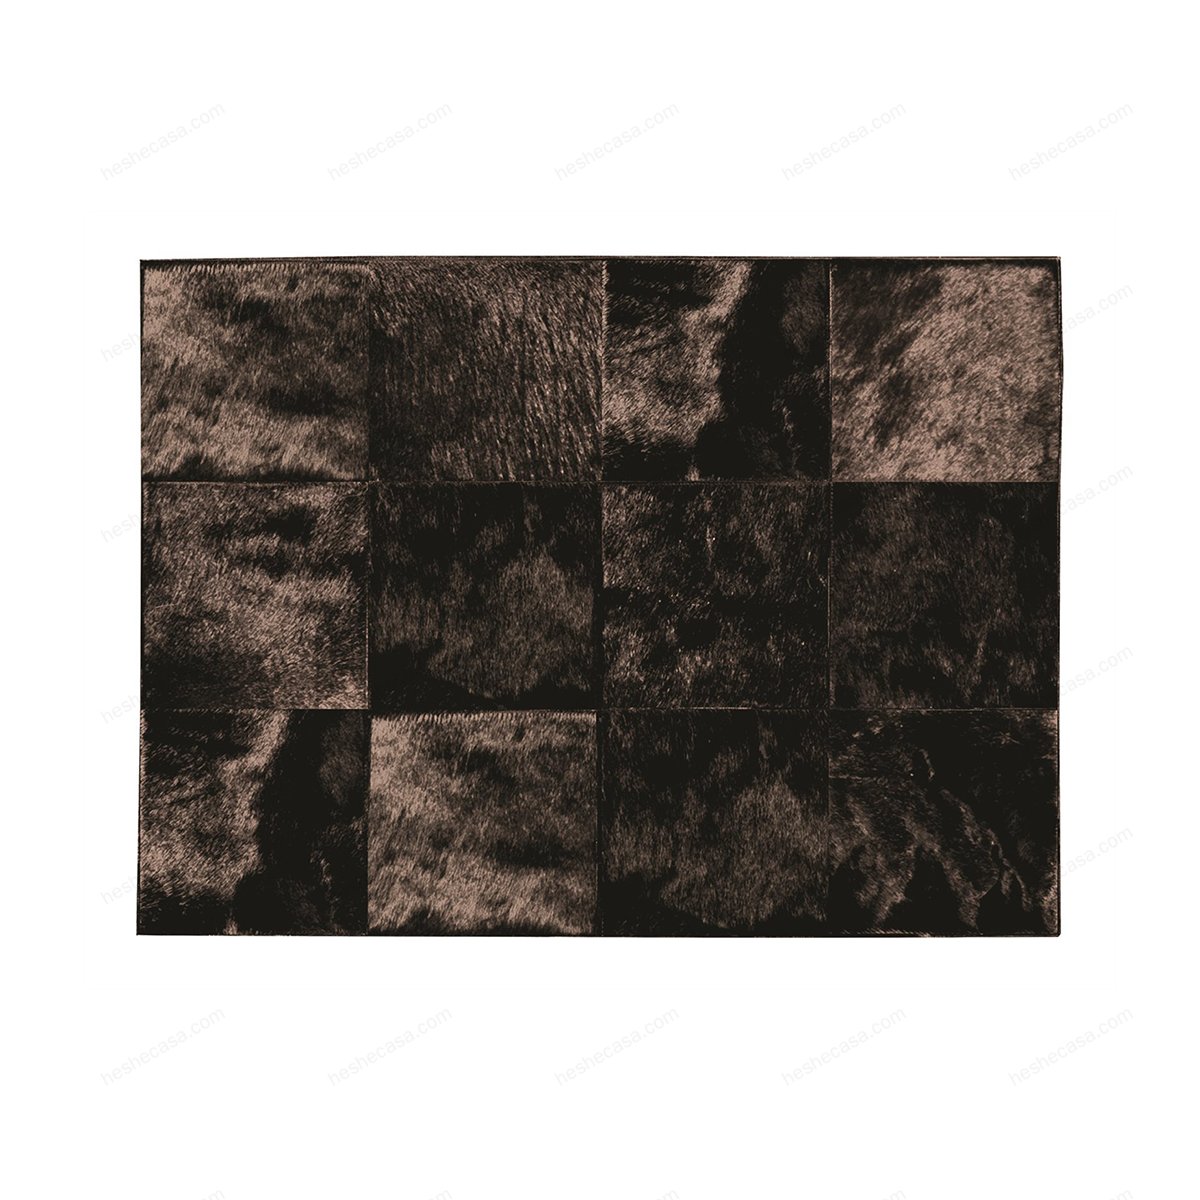 Leather-carpets地毯